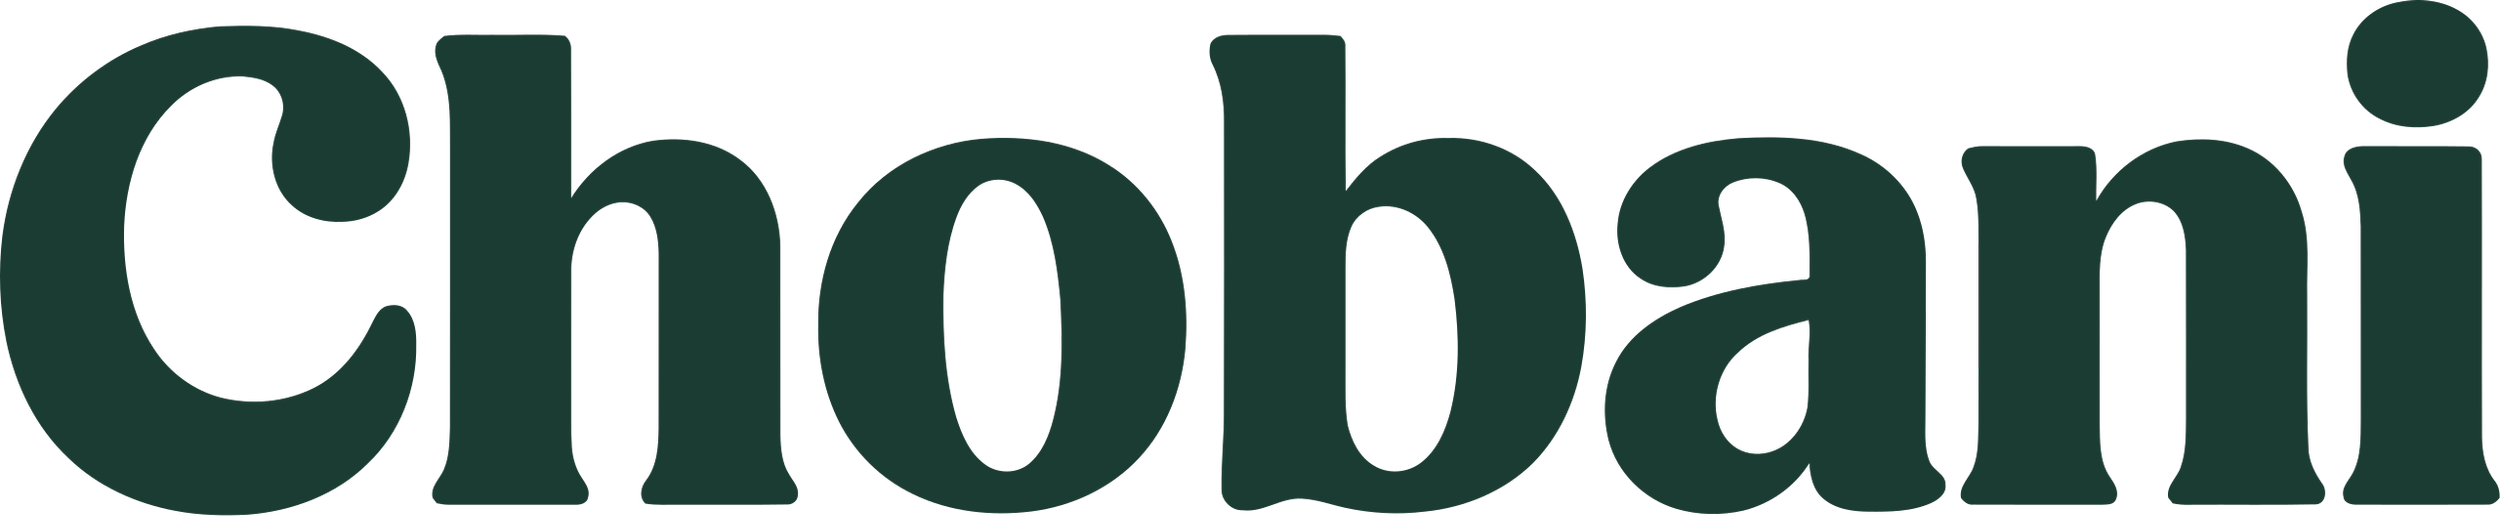 Chobani_2017_logo.svg.png